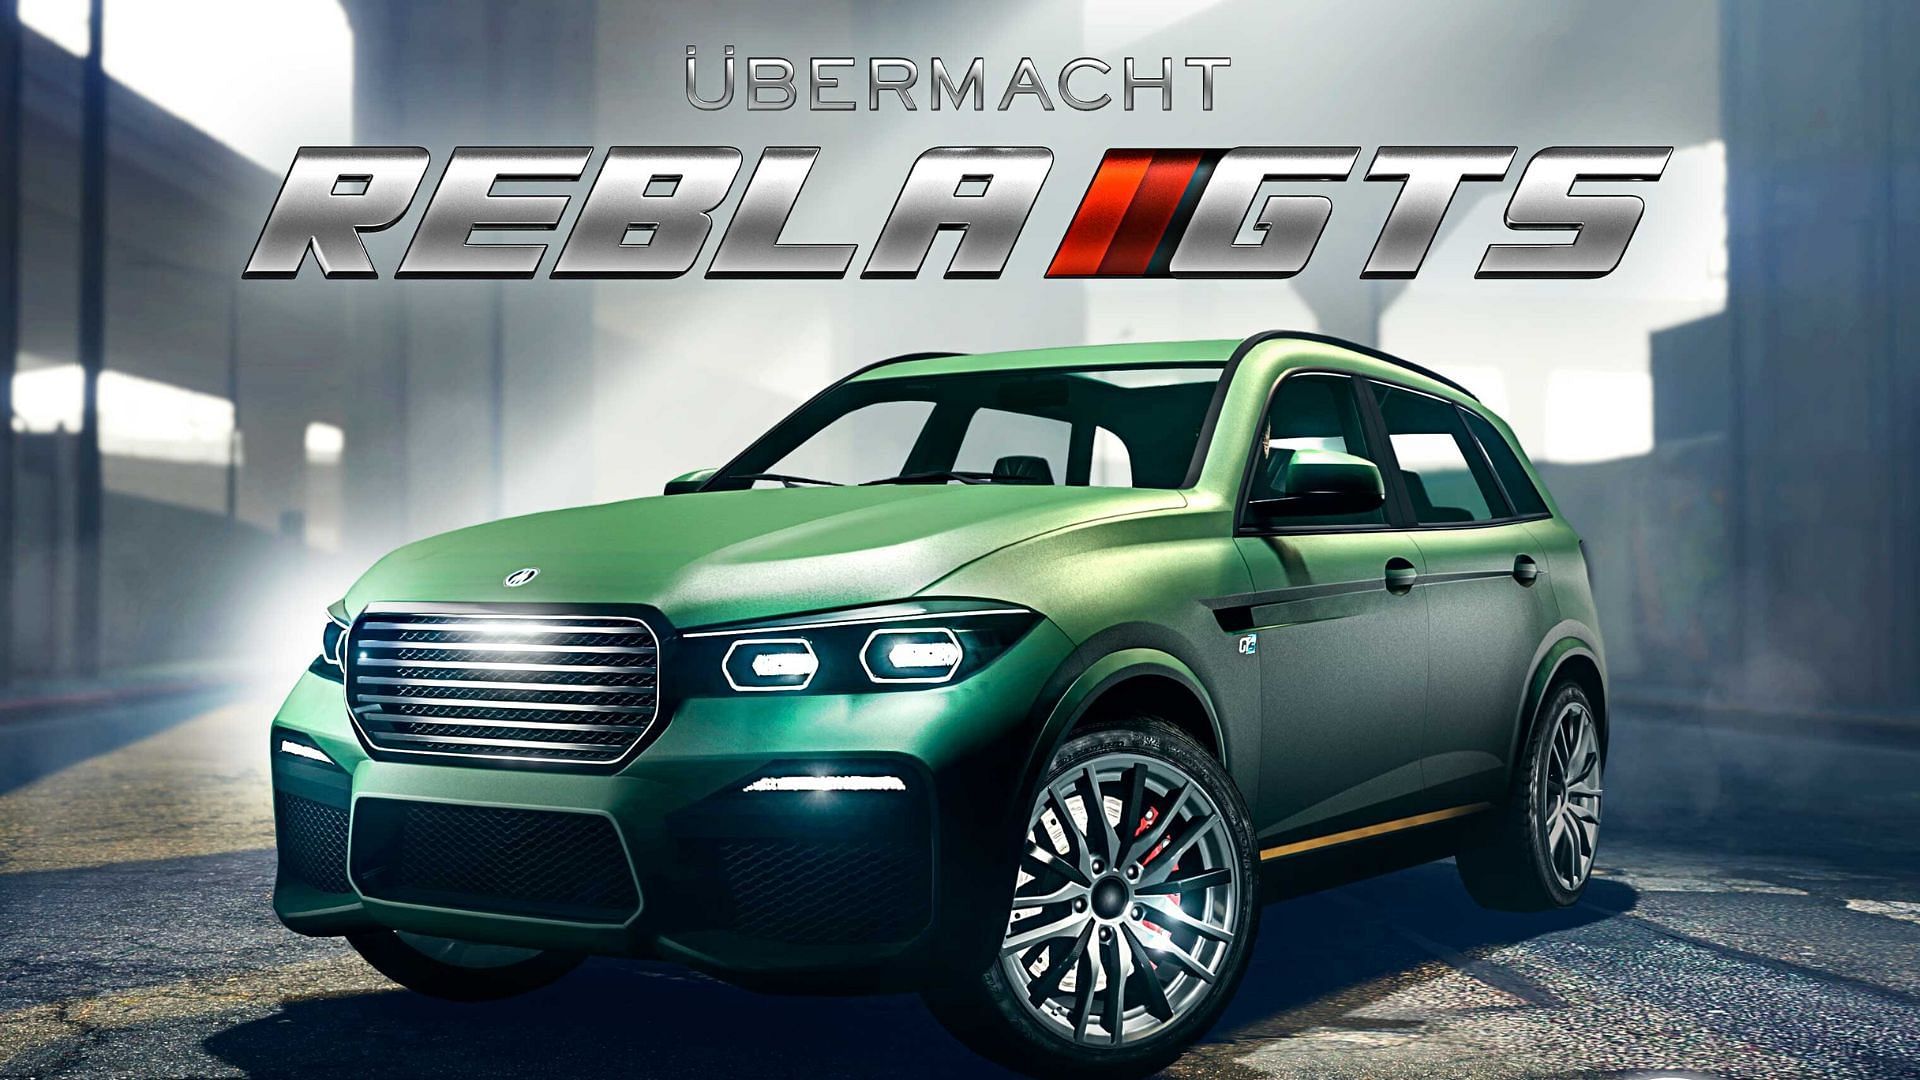 Ubermacht Rebla GTS is one of the best SUVs in GTA Online (Image via Rockstar Games)